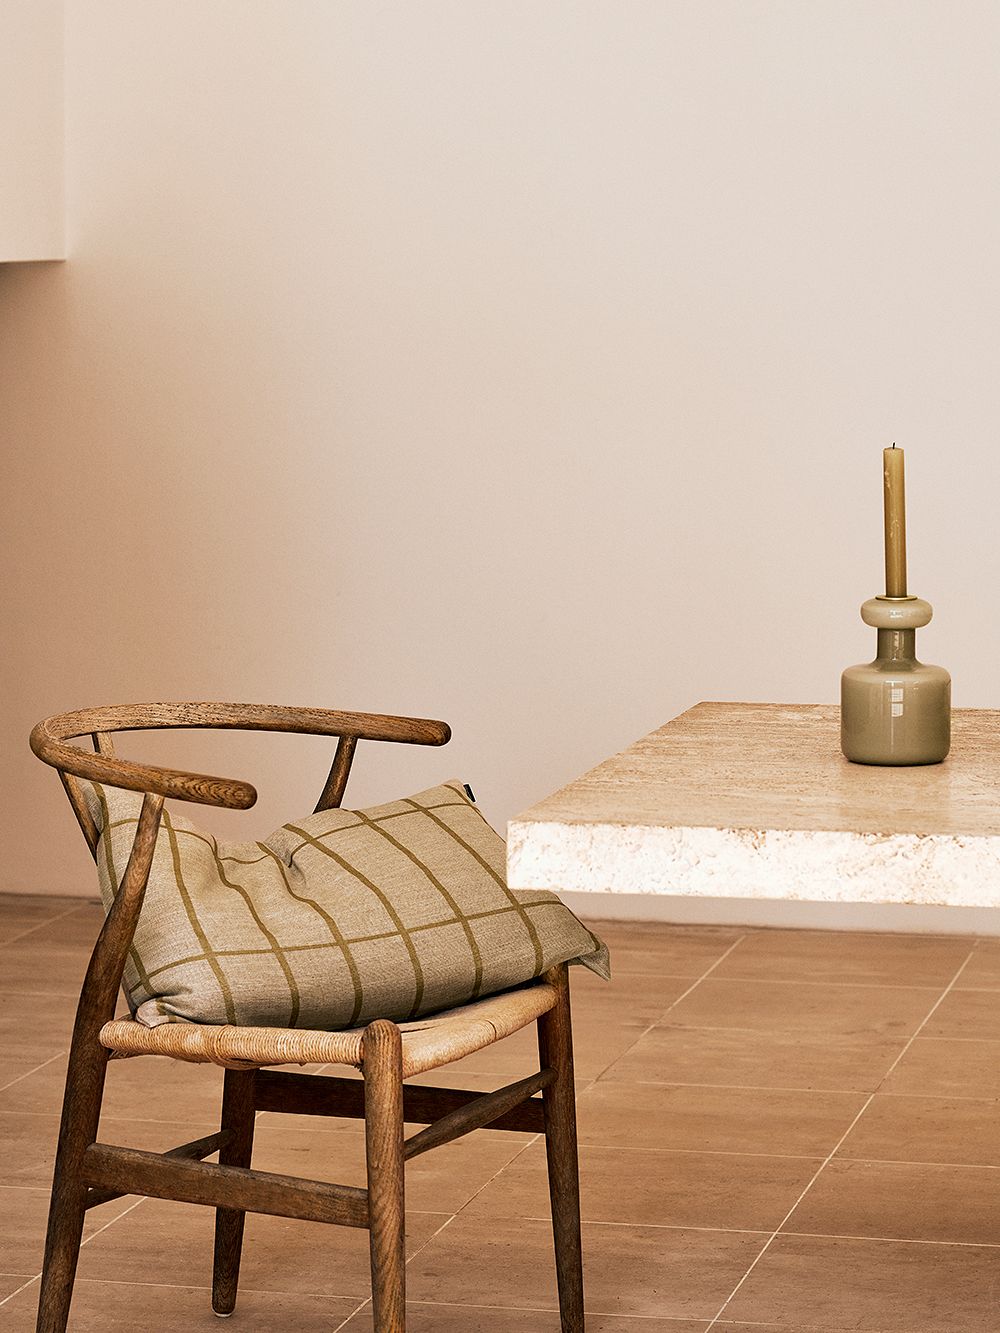 An image with Marimekko's Tiiliskivi cushion cover on Carl Hansen & Søn's Wishbone chair as part of the decor. Marimekko's Plant candle holder on the table.